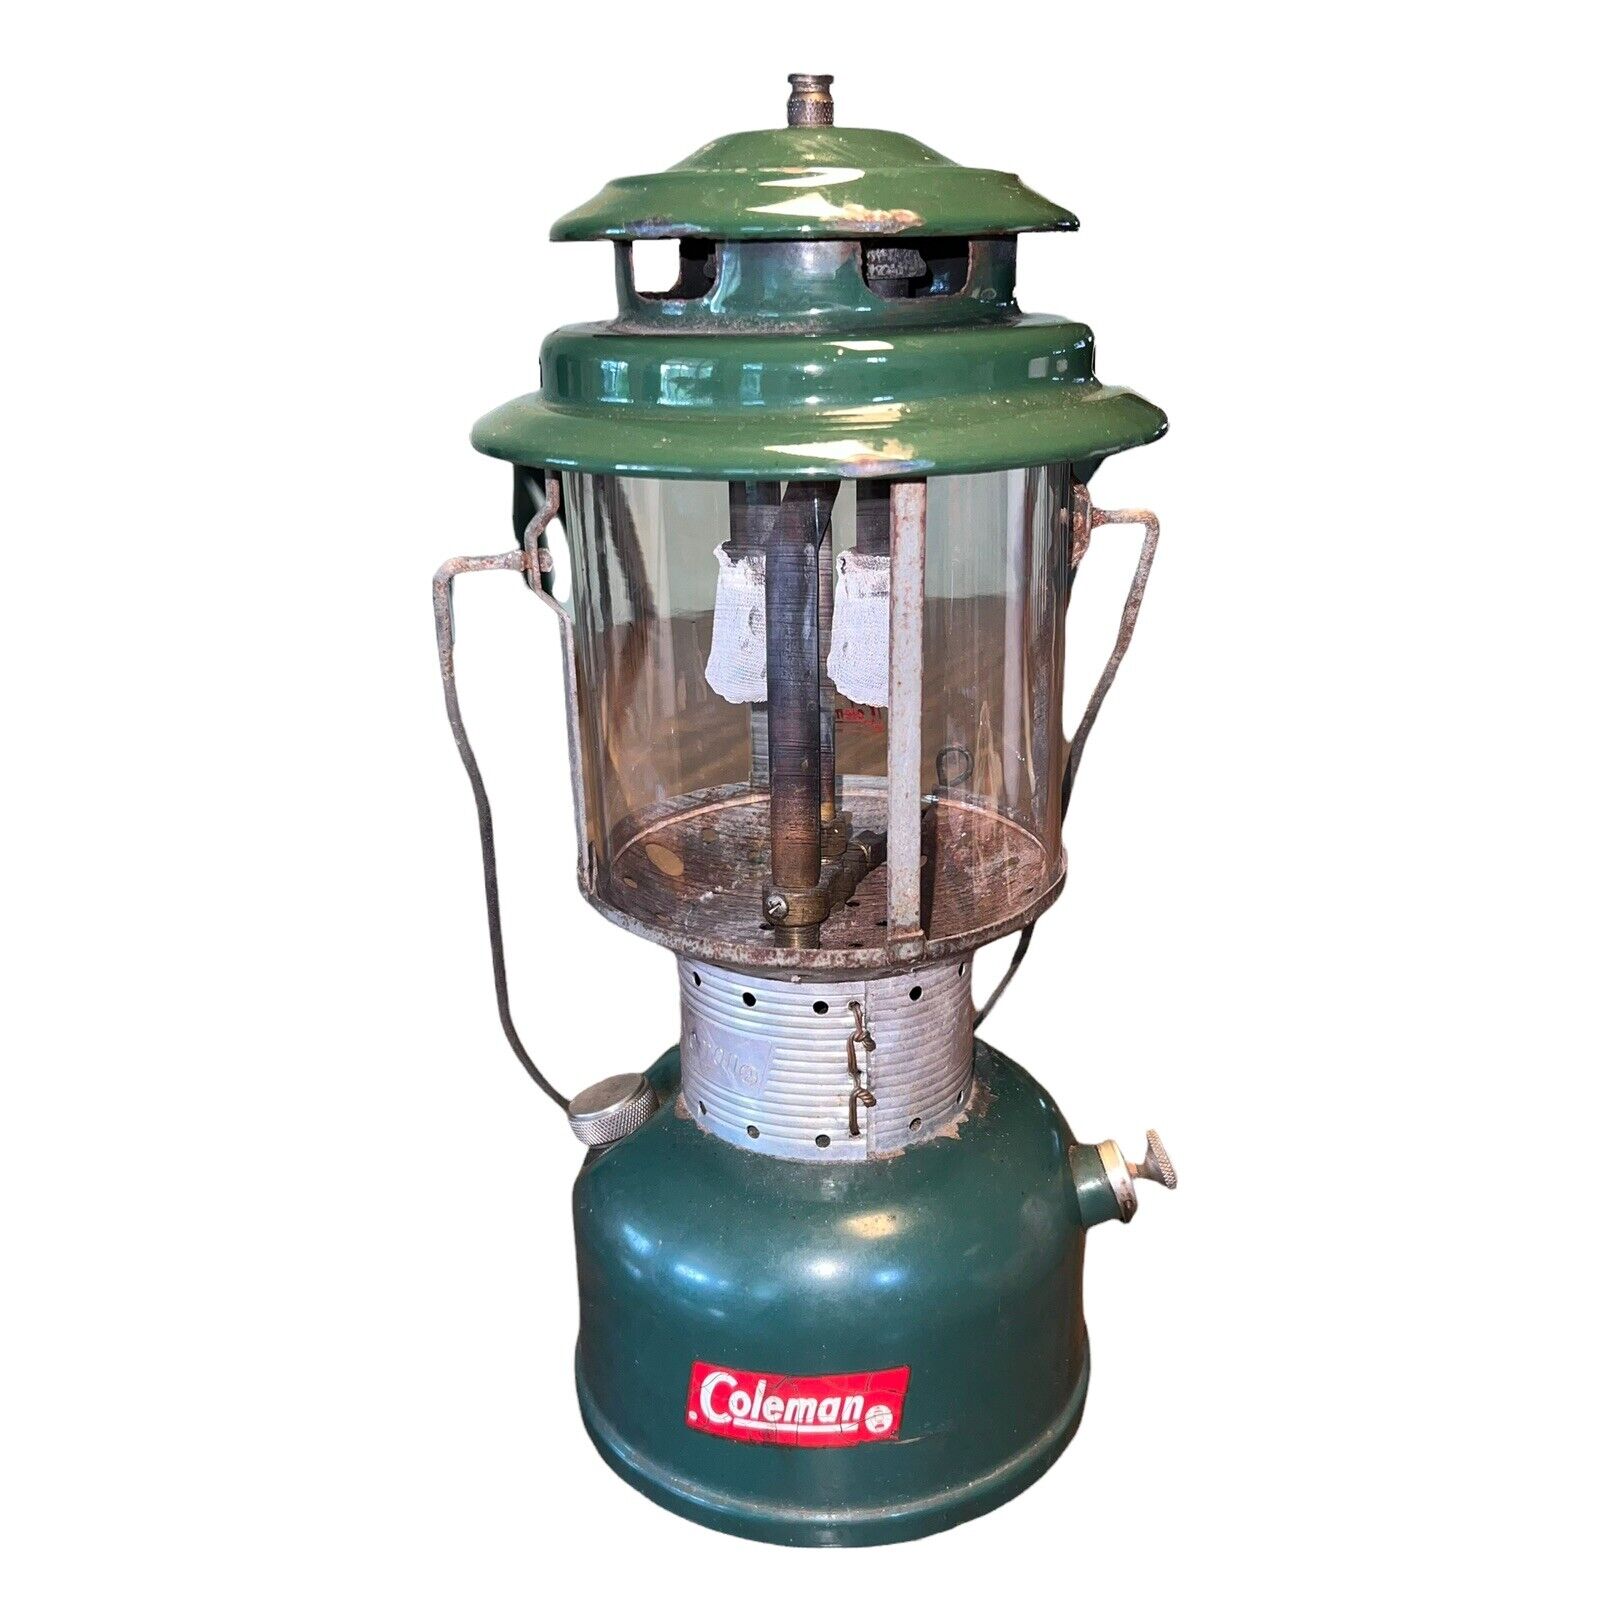 Vintage COLEMAN Lantern 220F CAMPING LIGHT WITH METAL CASE